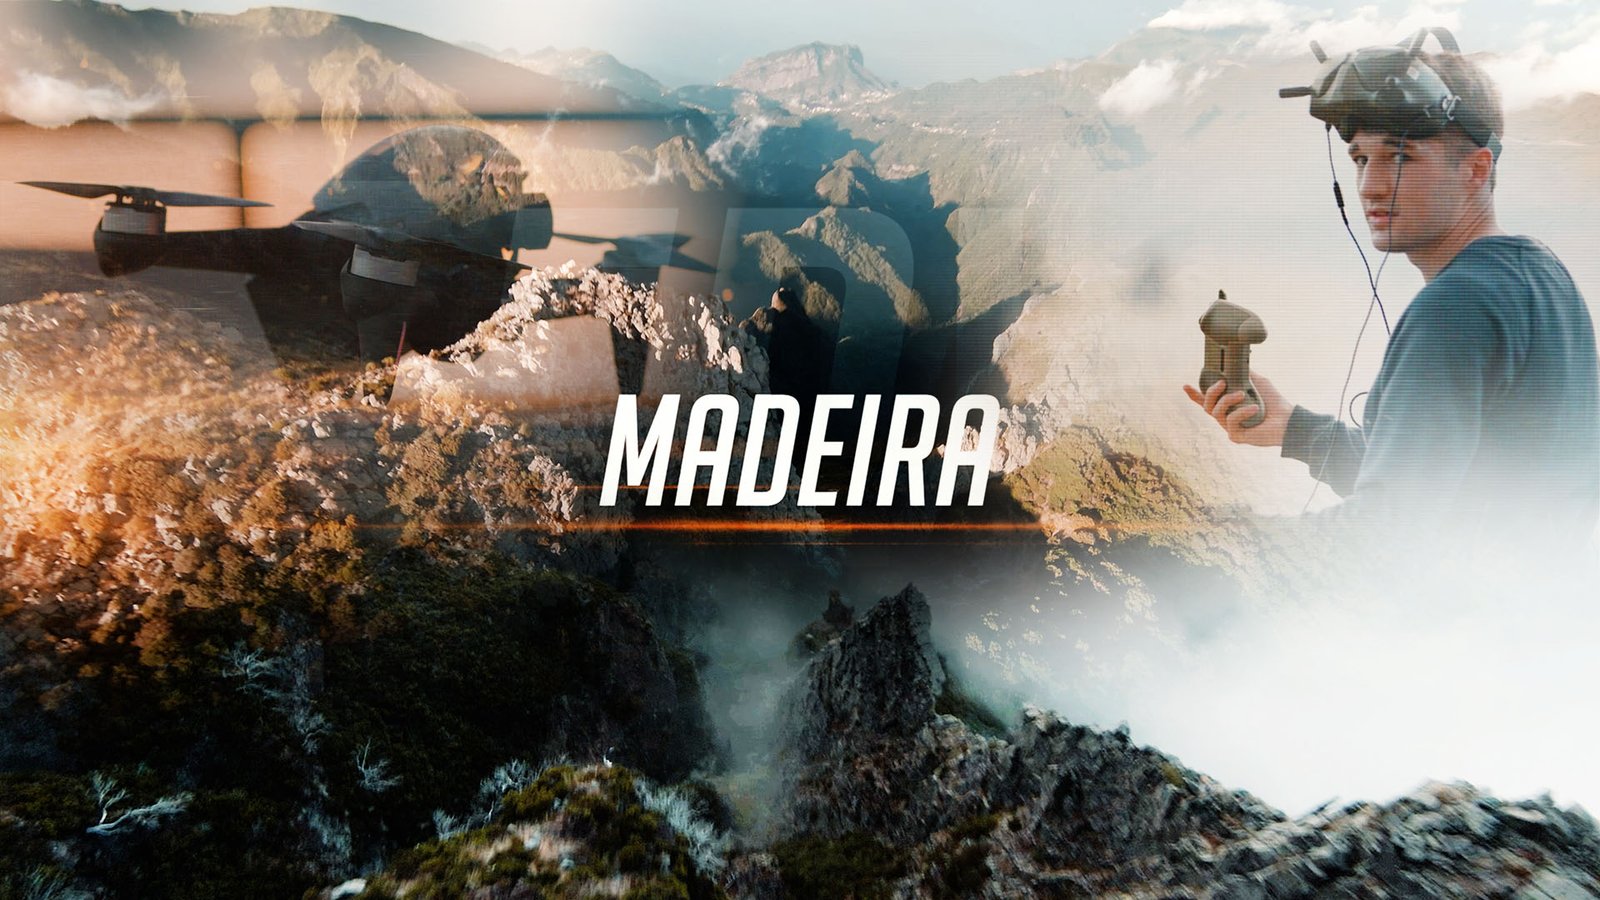 Madeira Cinematic DJI FPV Video by Rory Watson